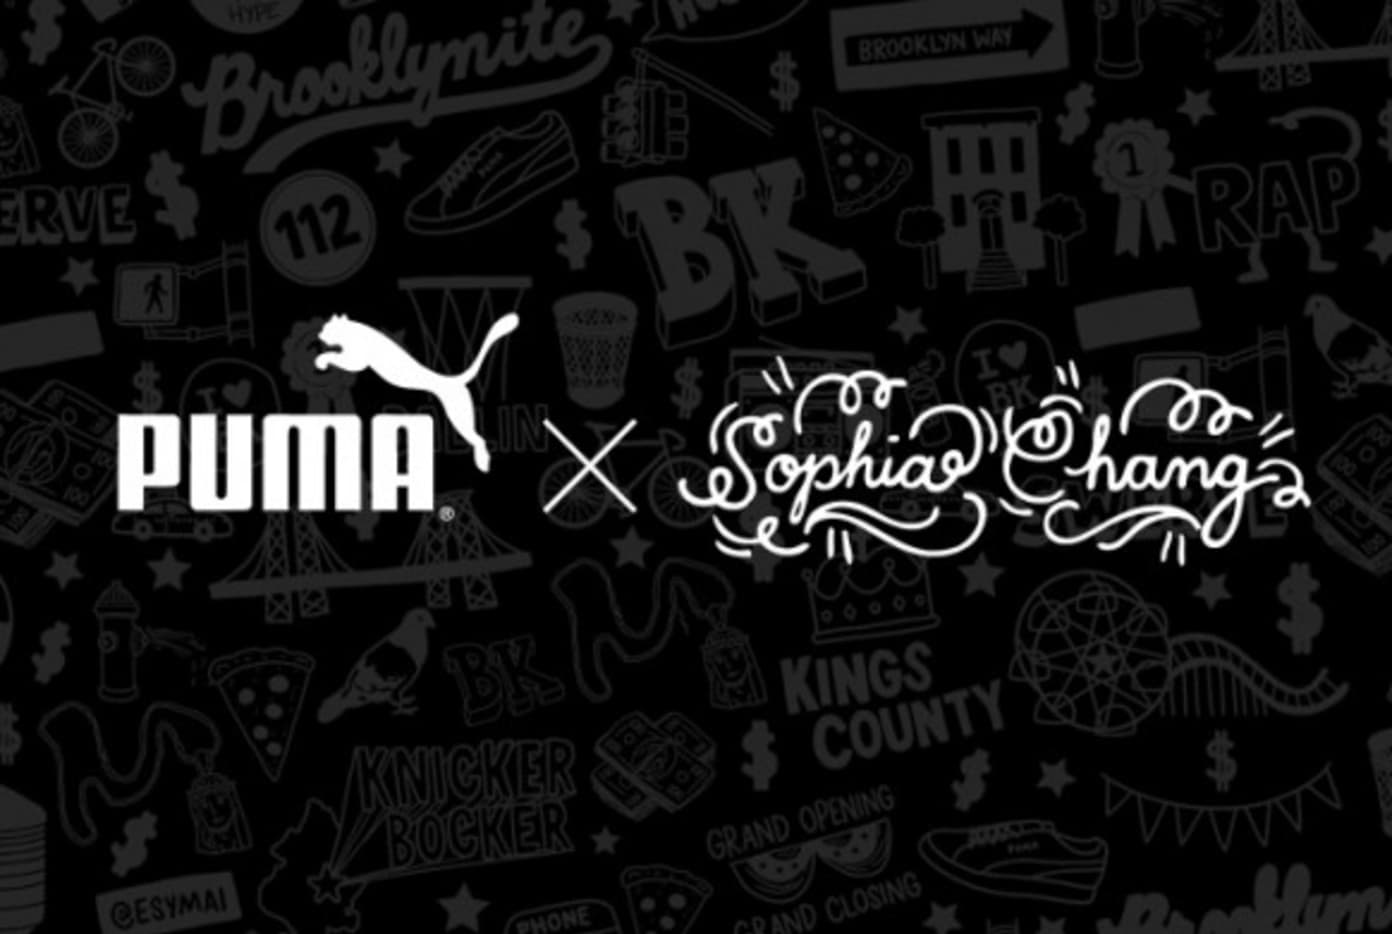 PUMA x Sophia Chang Disc Blaze “Brooklynite”